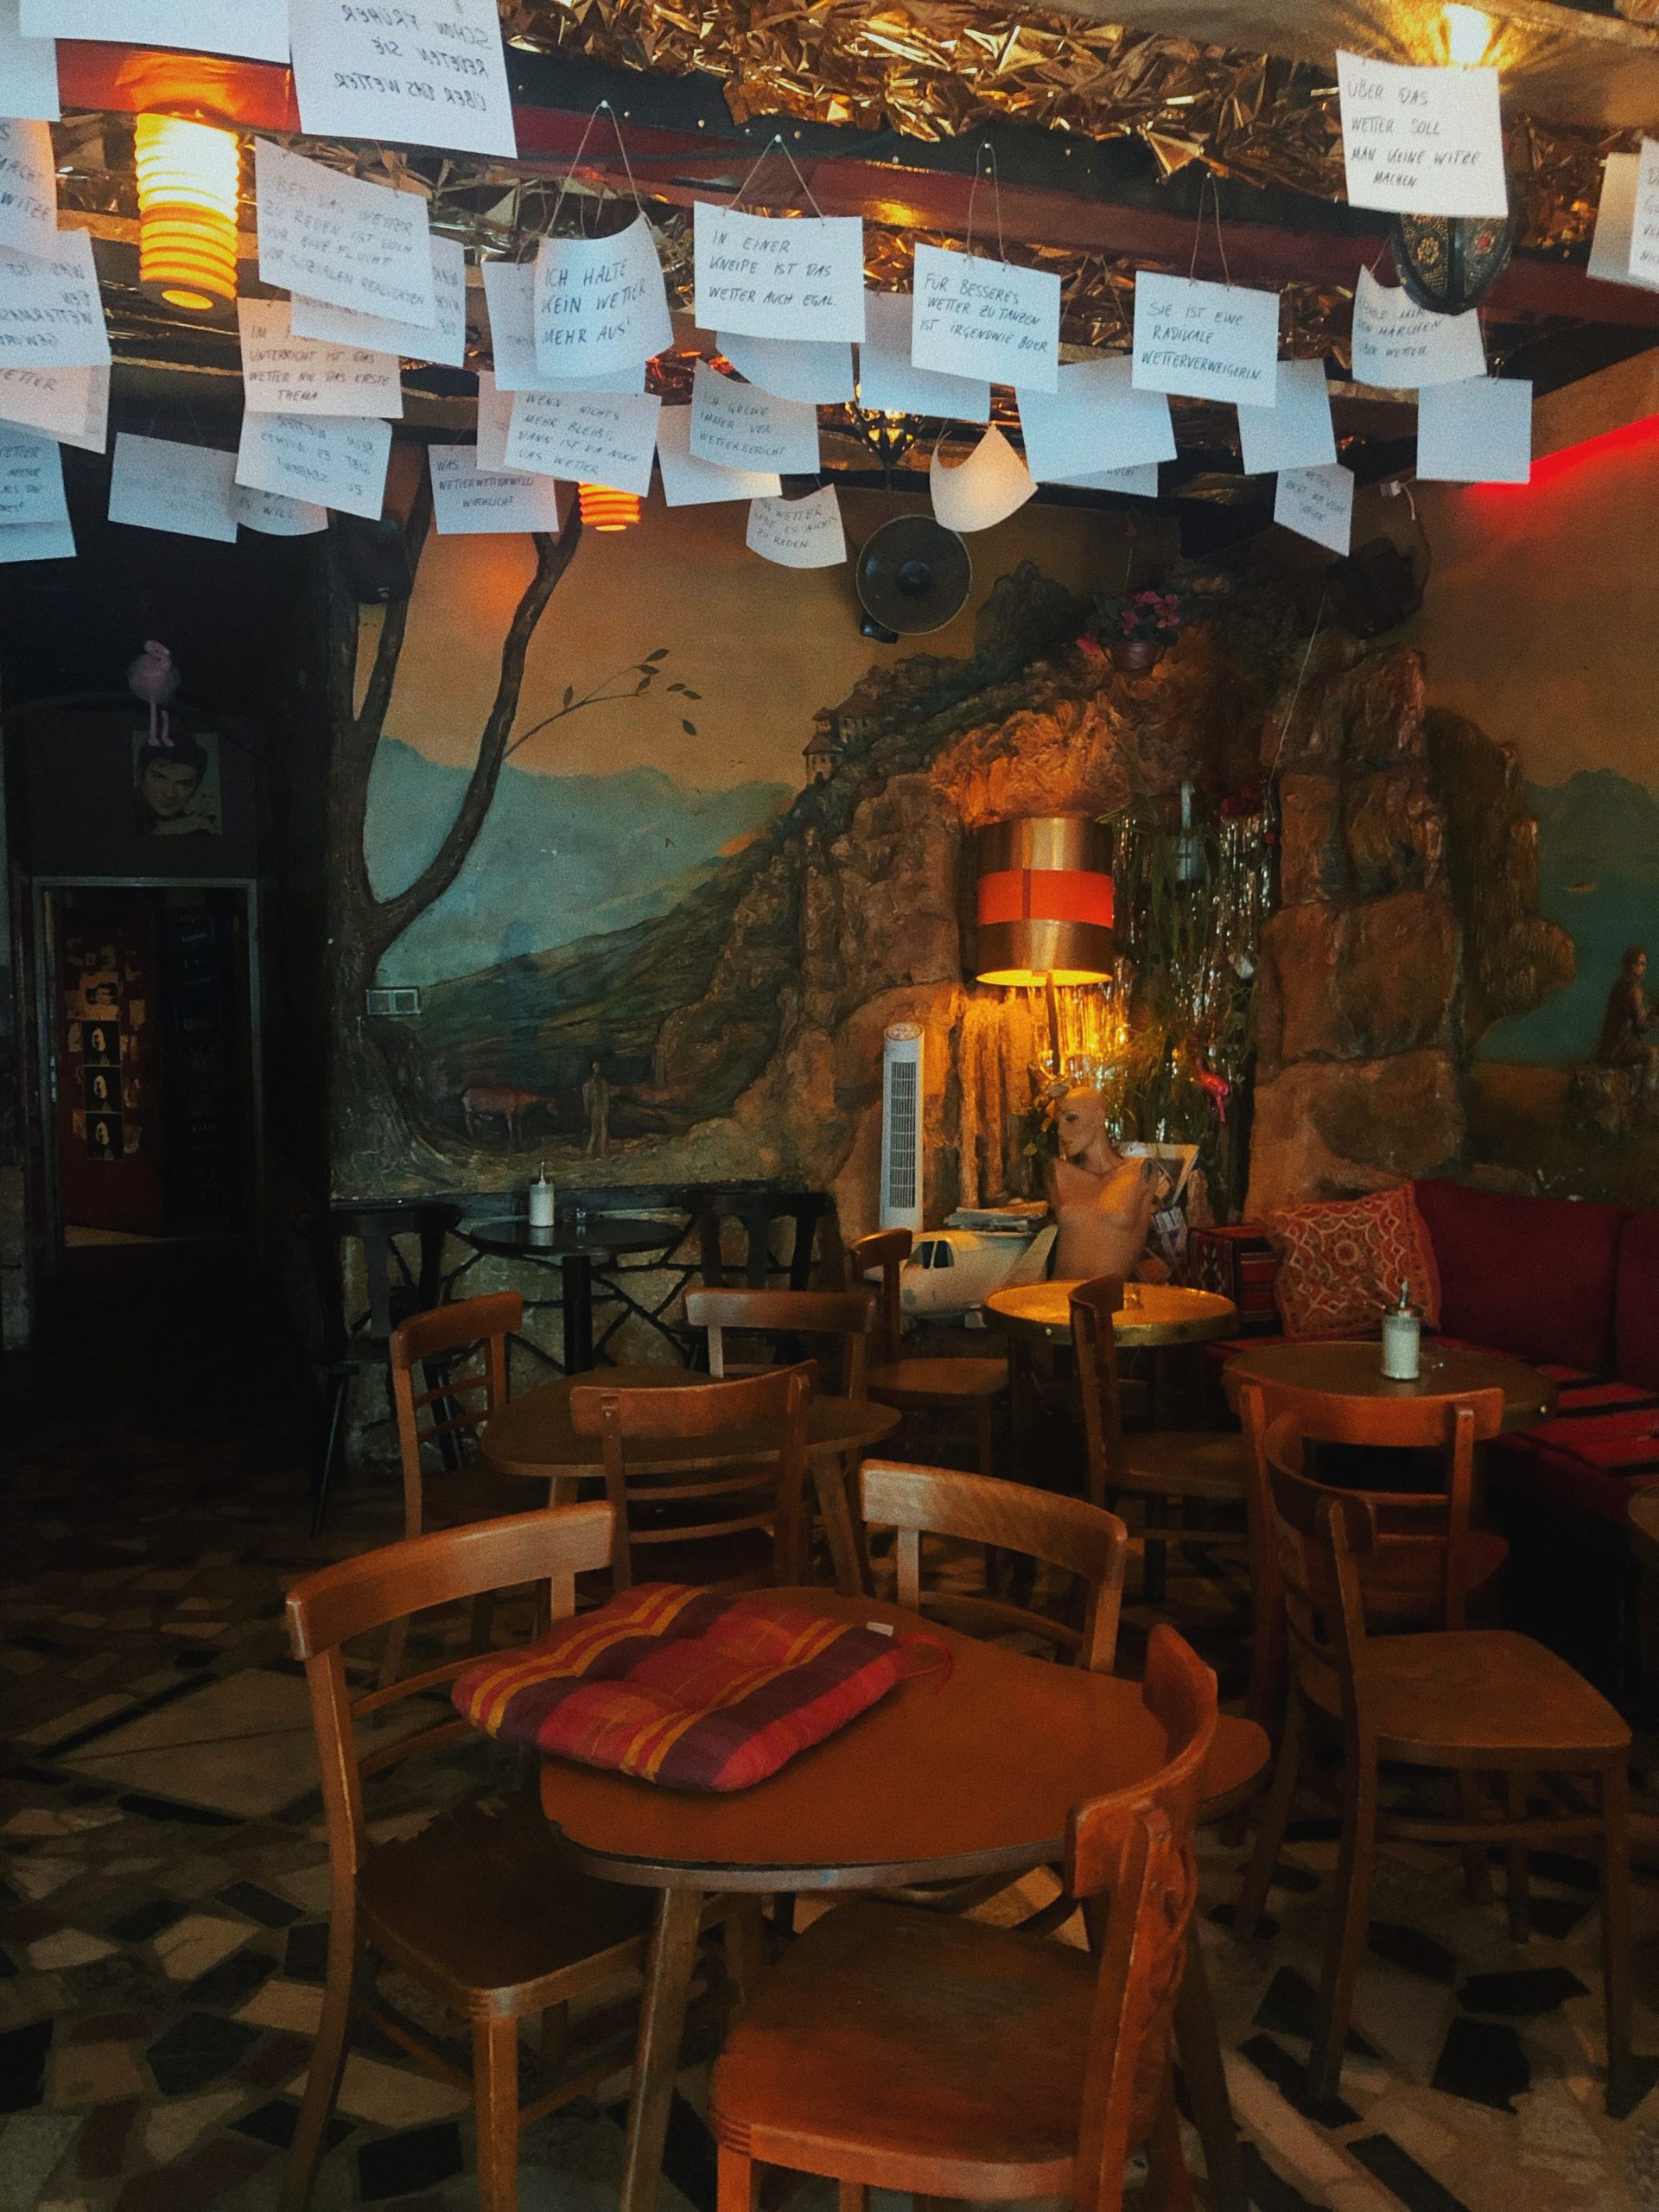 Sofia cafe and bar